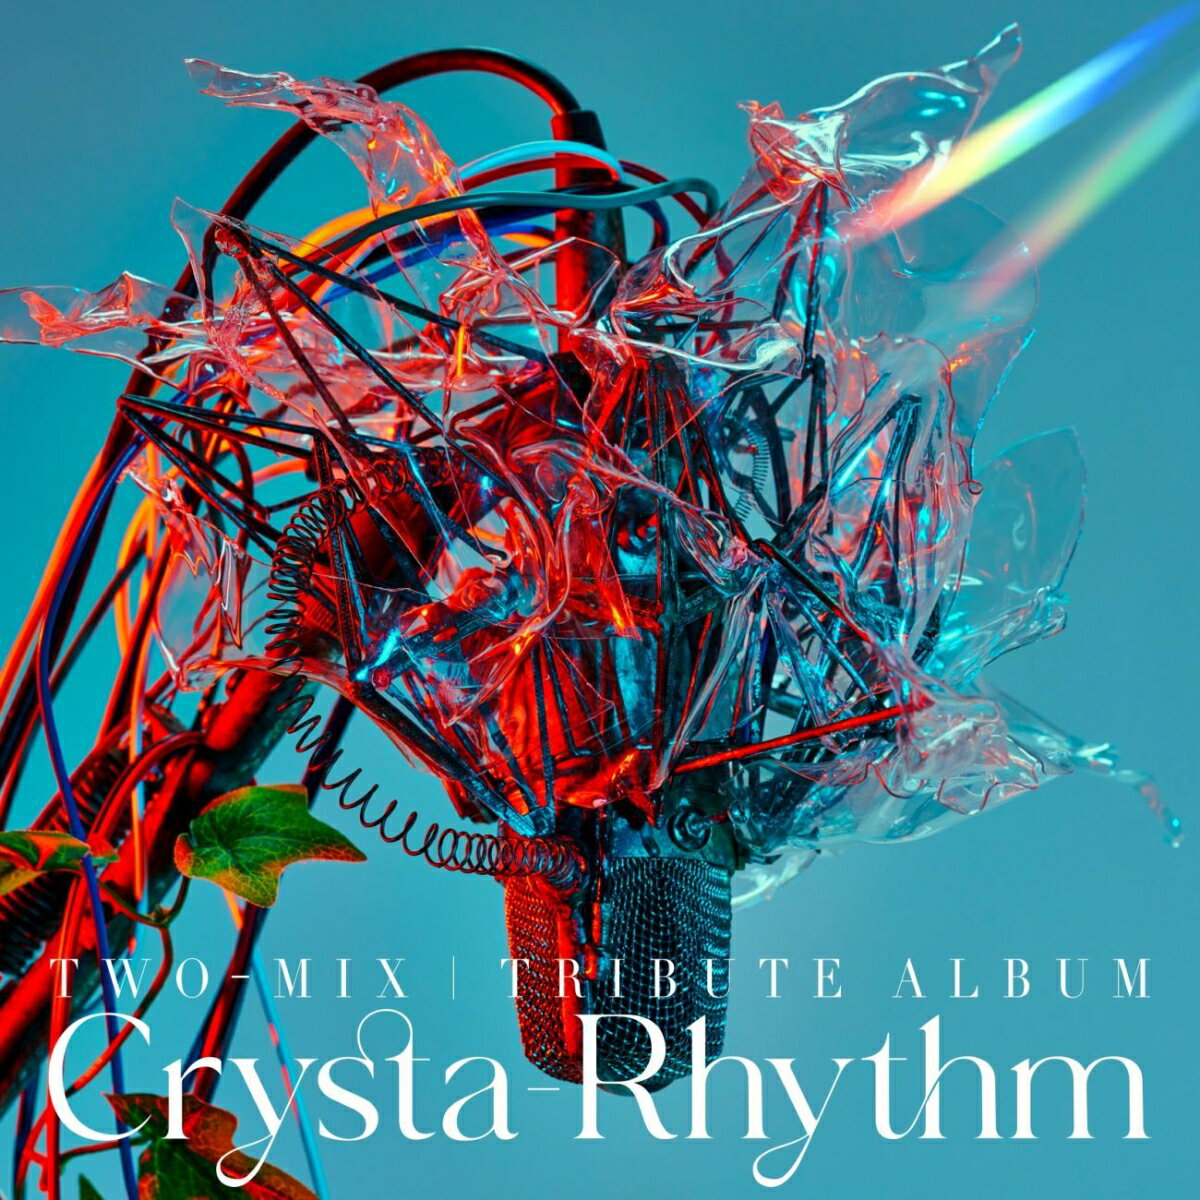 TWO-MIX Tribute Album ”Crysta-Rhythm” (V.A.)